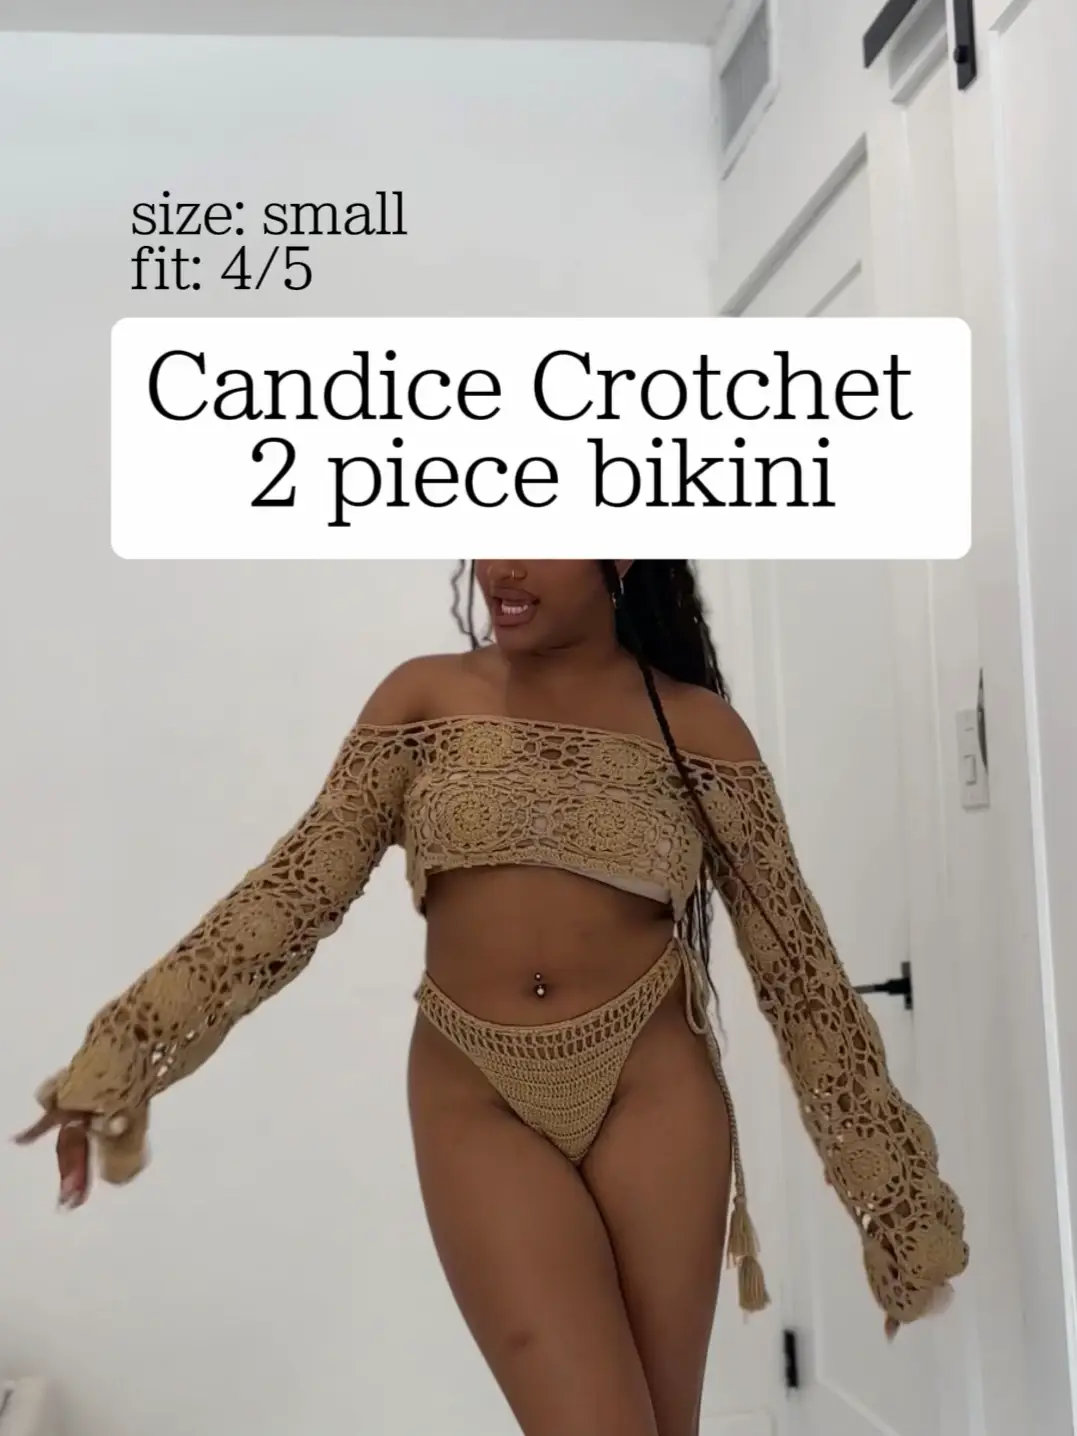 I’m selling a fashion nova bikini that I ordered and it is way too small